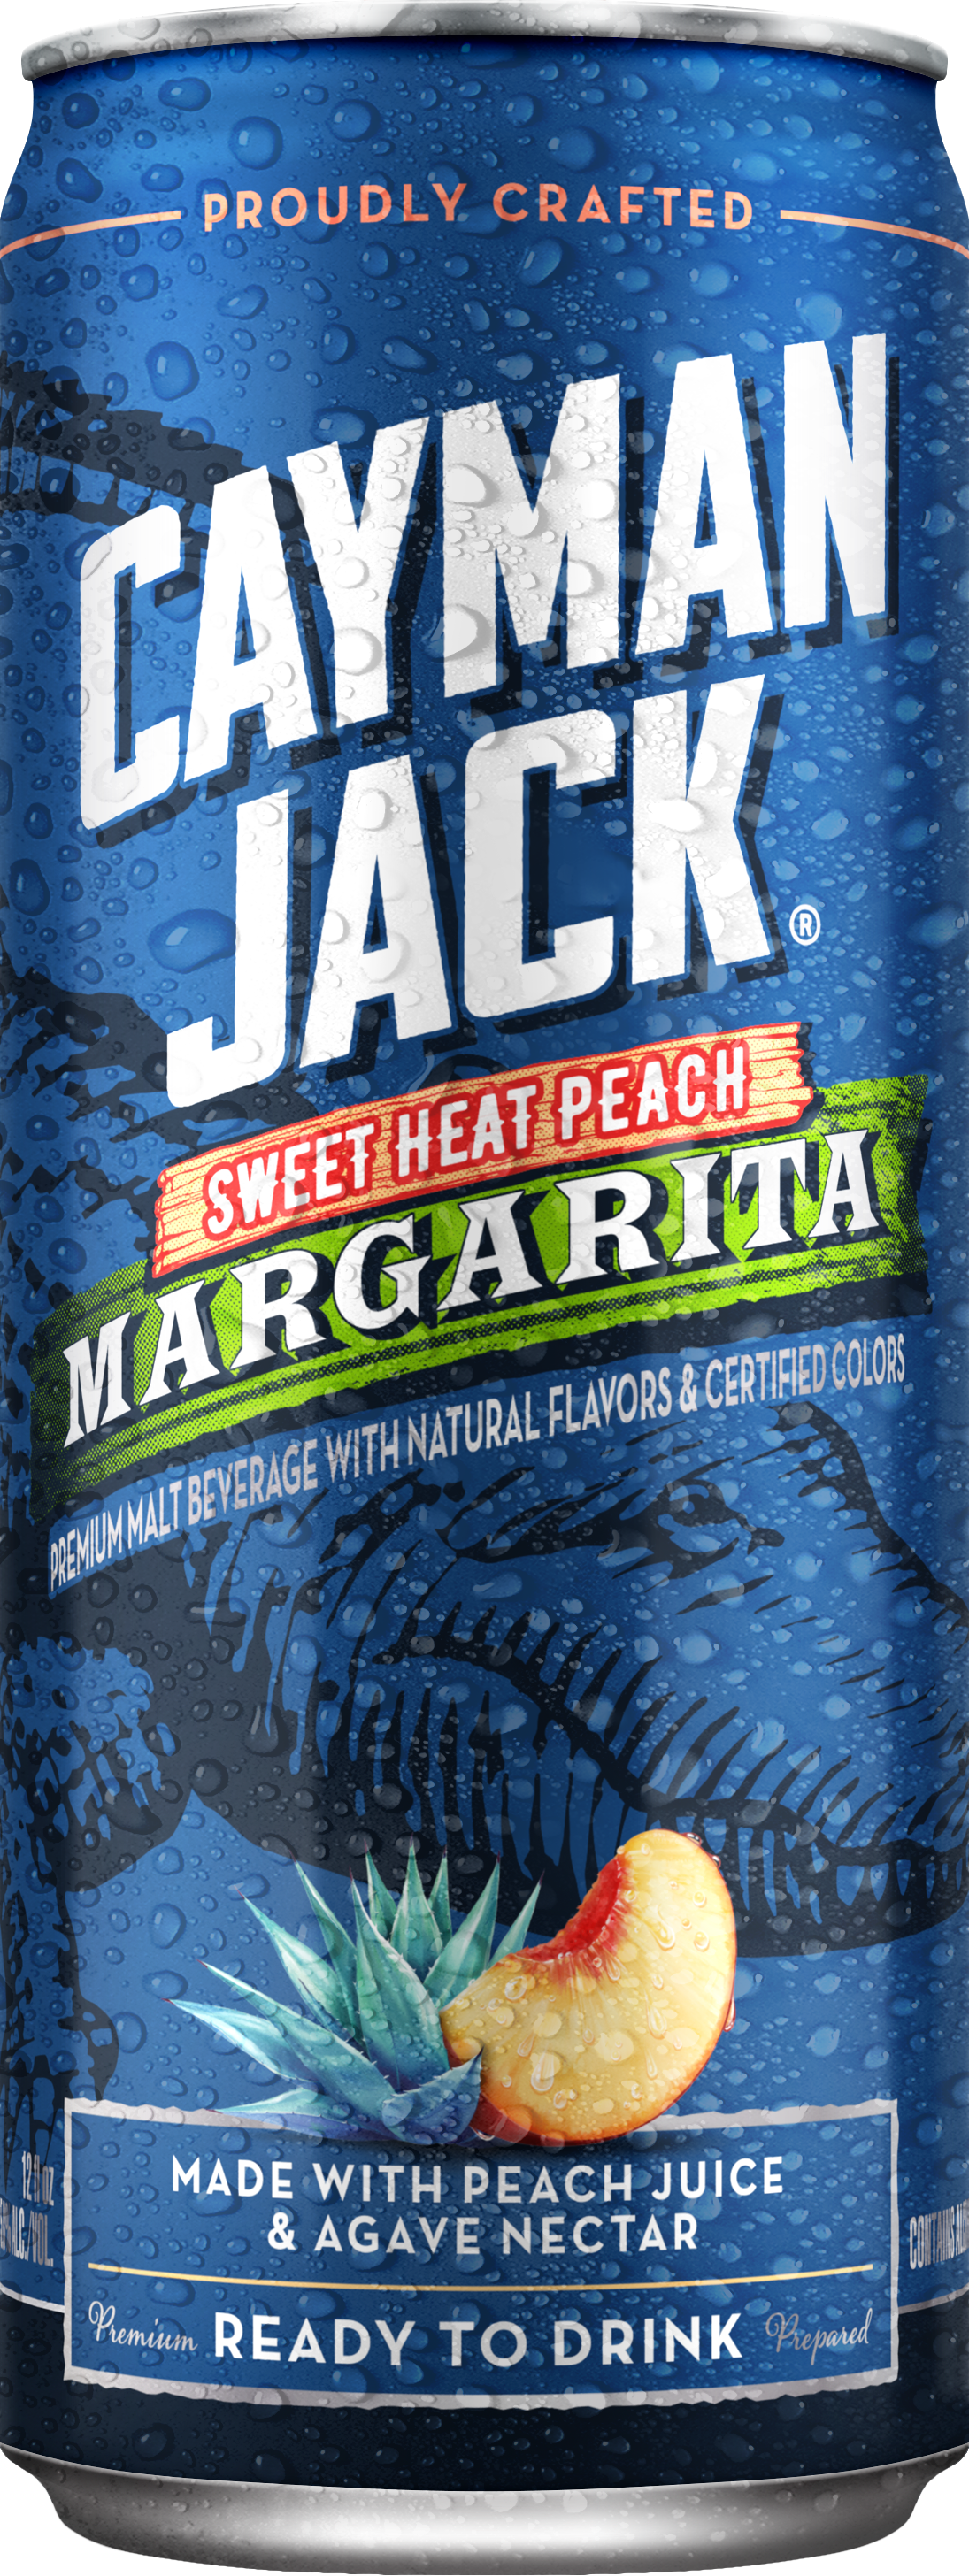 Sweet Heat Peach Margarita